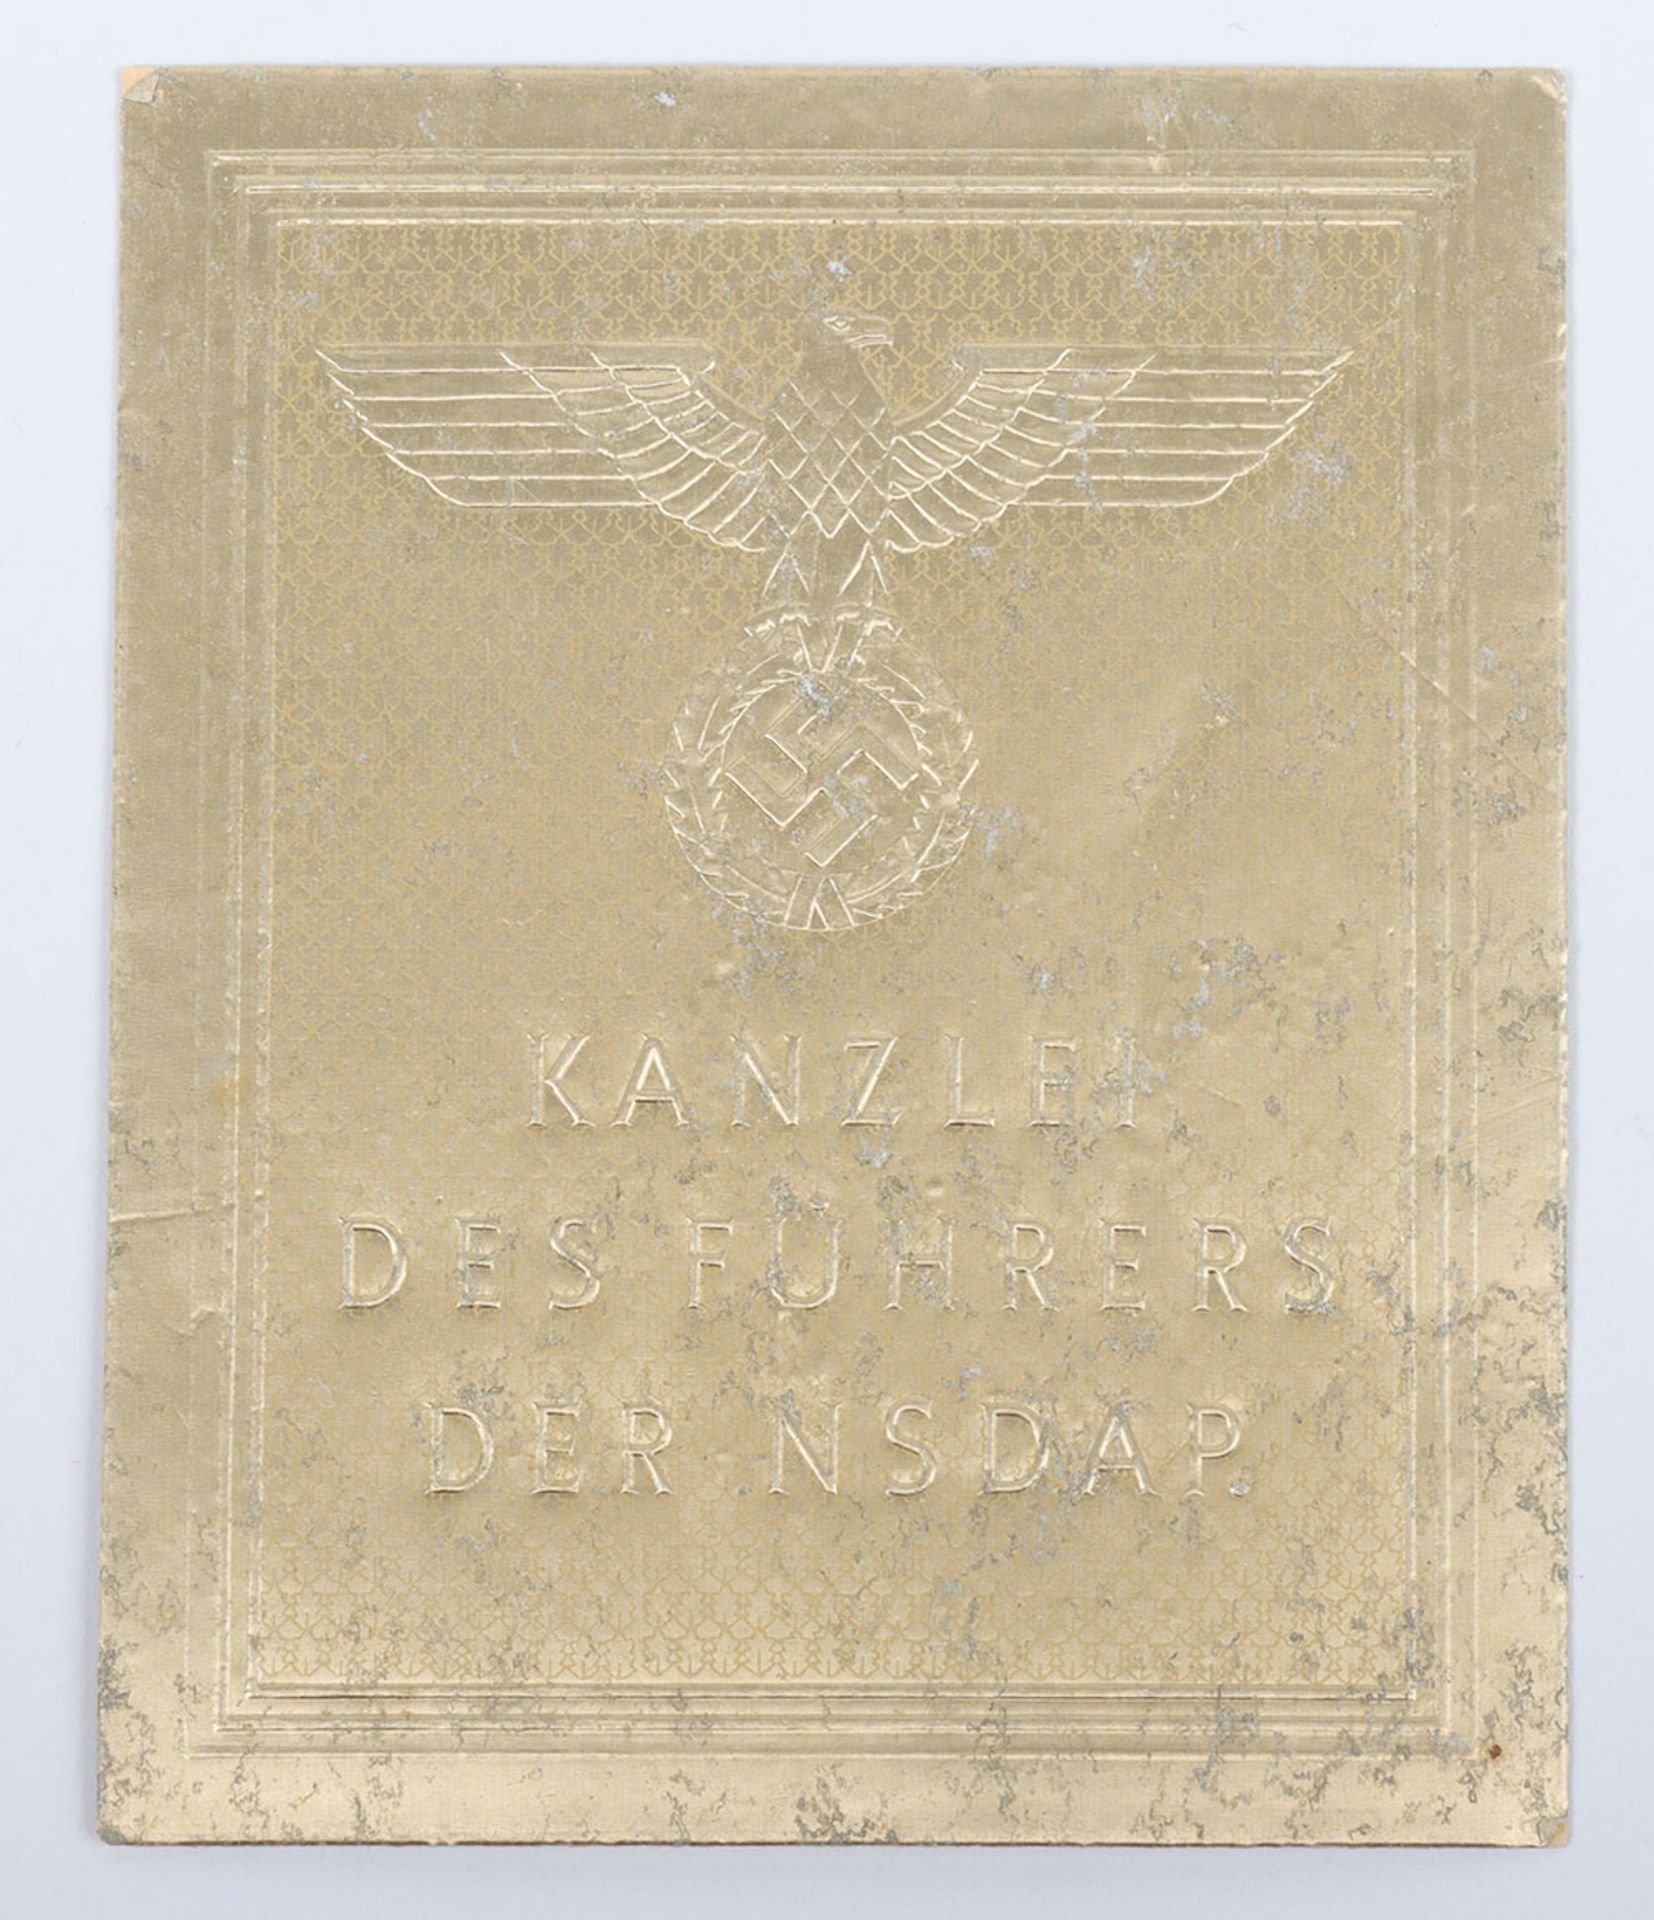 Ex Libris Plate From a Book in the Reich Chancellery - Bild 2 aus 3